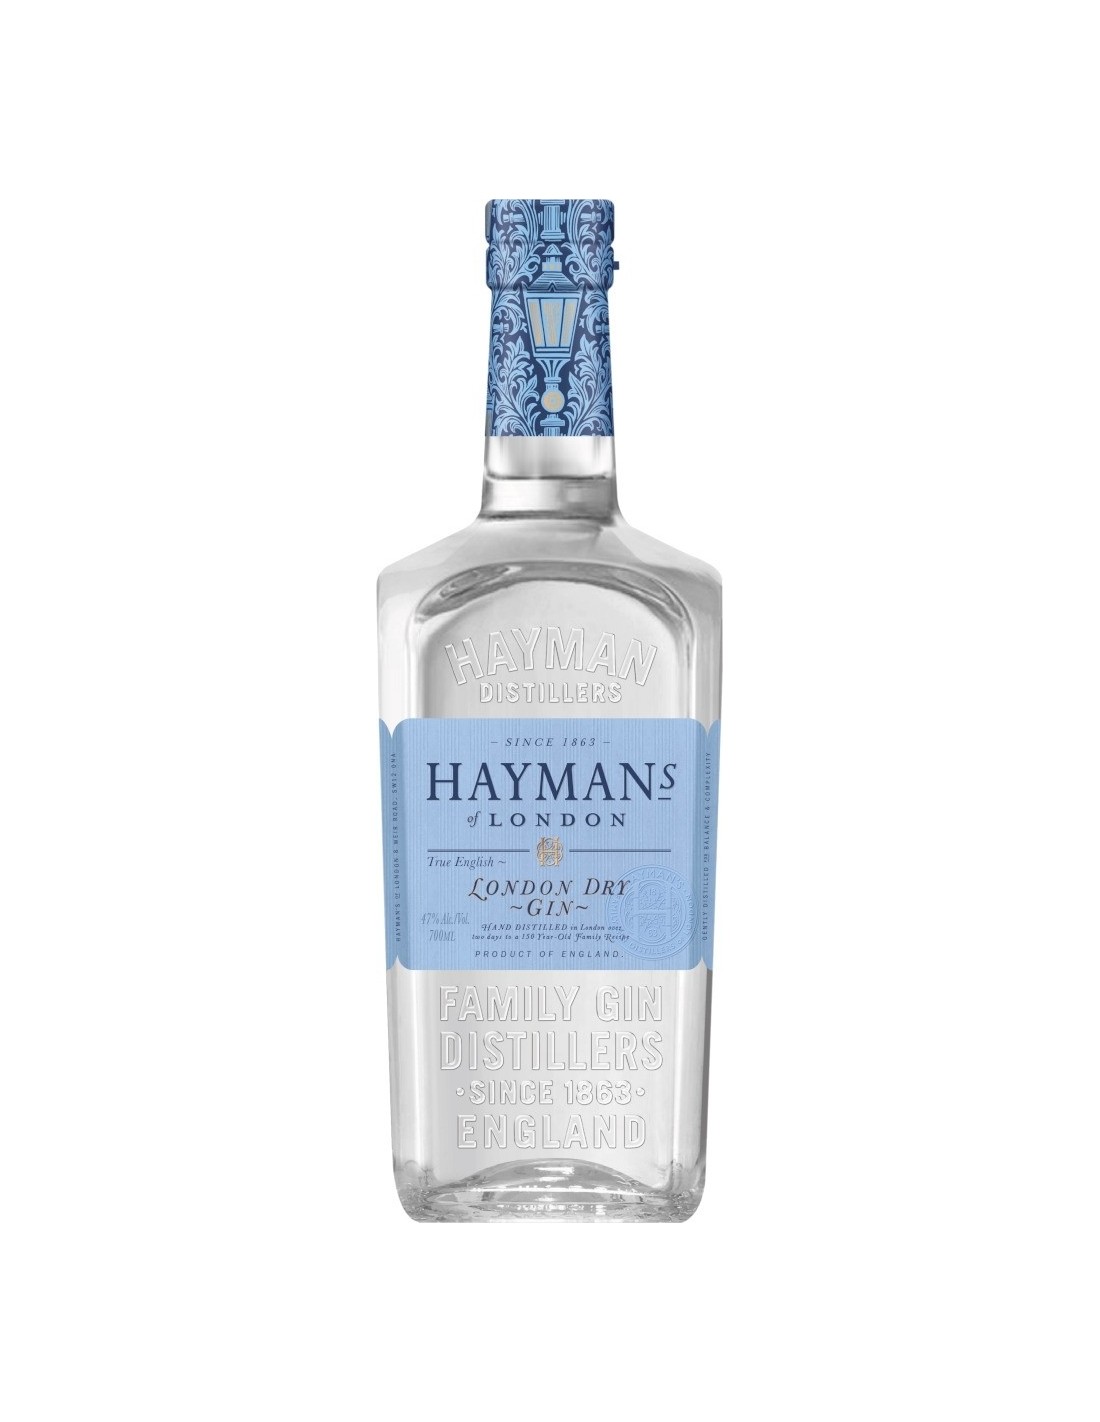 Gin Hayman's London Dry Gin, 47% alc., 0.7L, Anglia